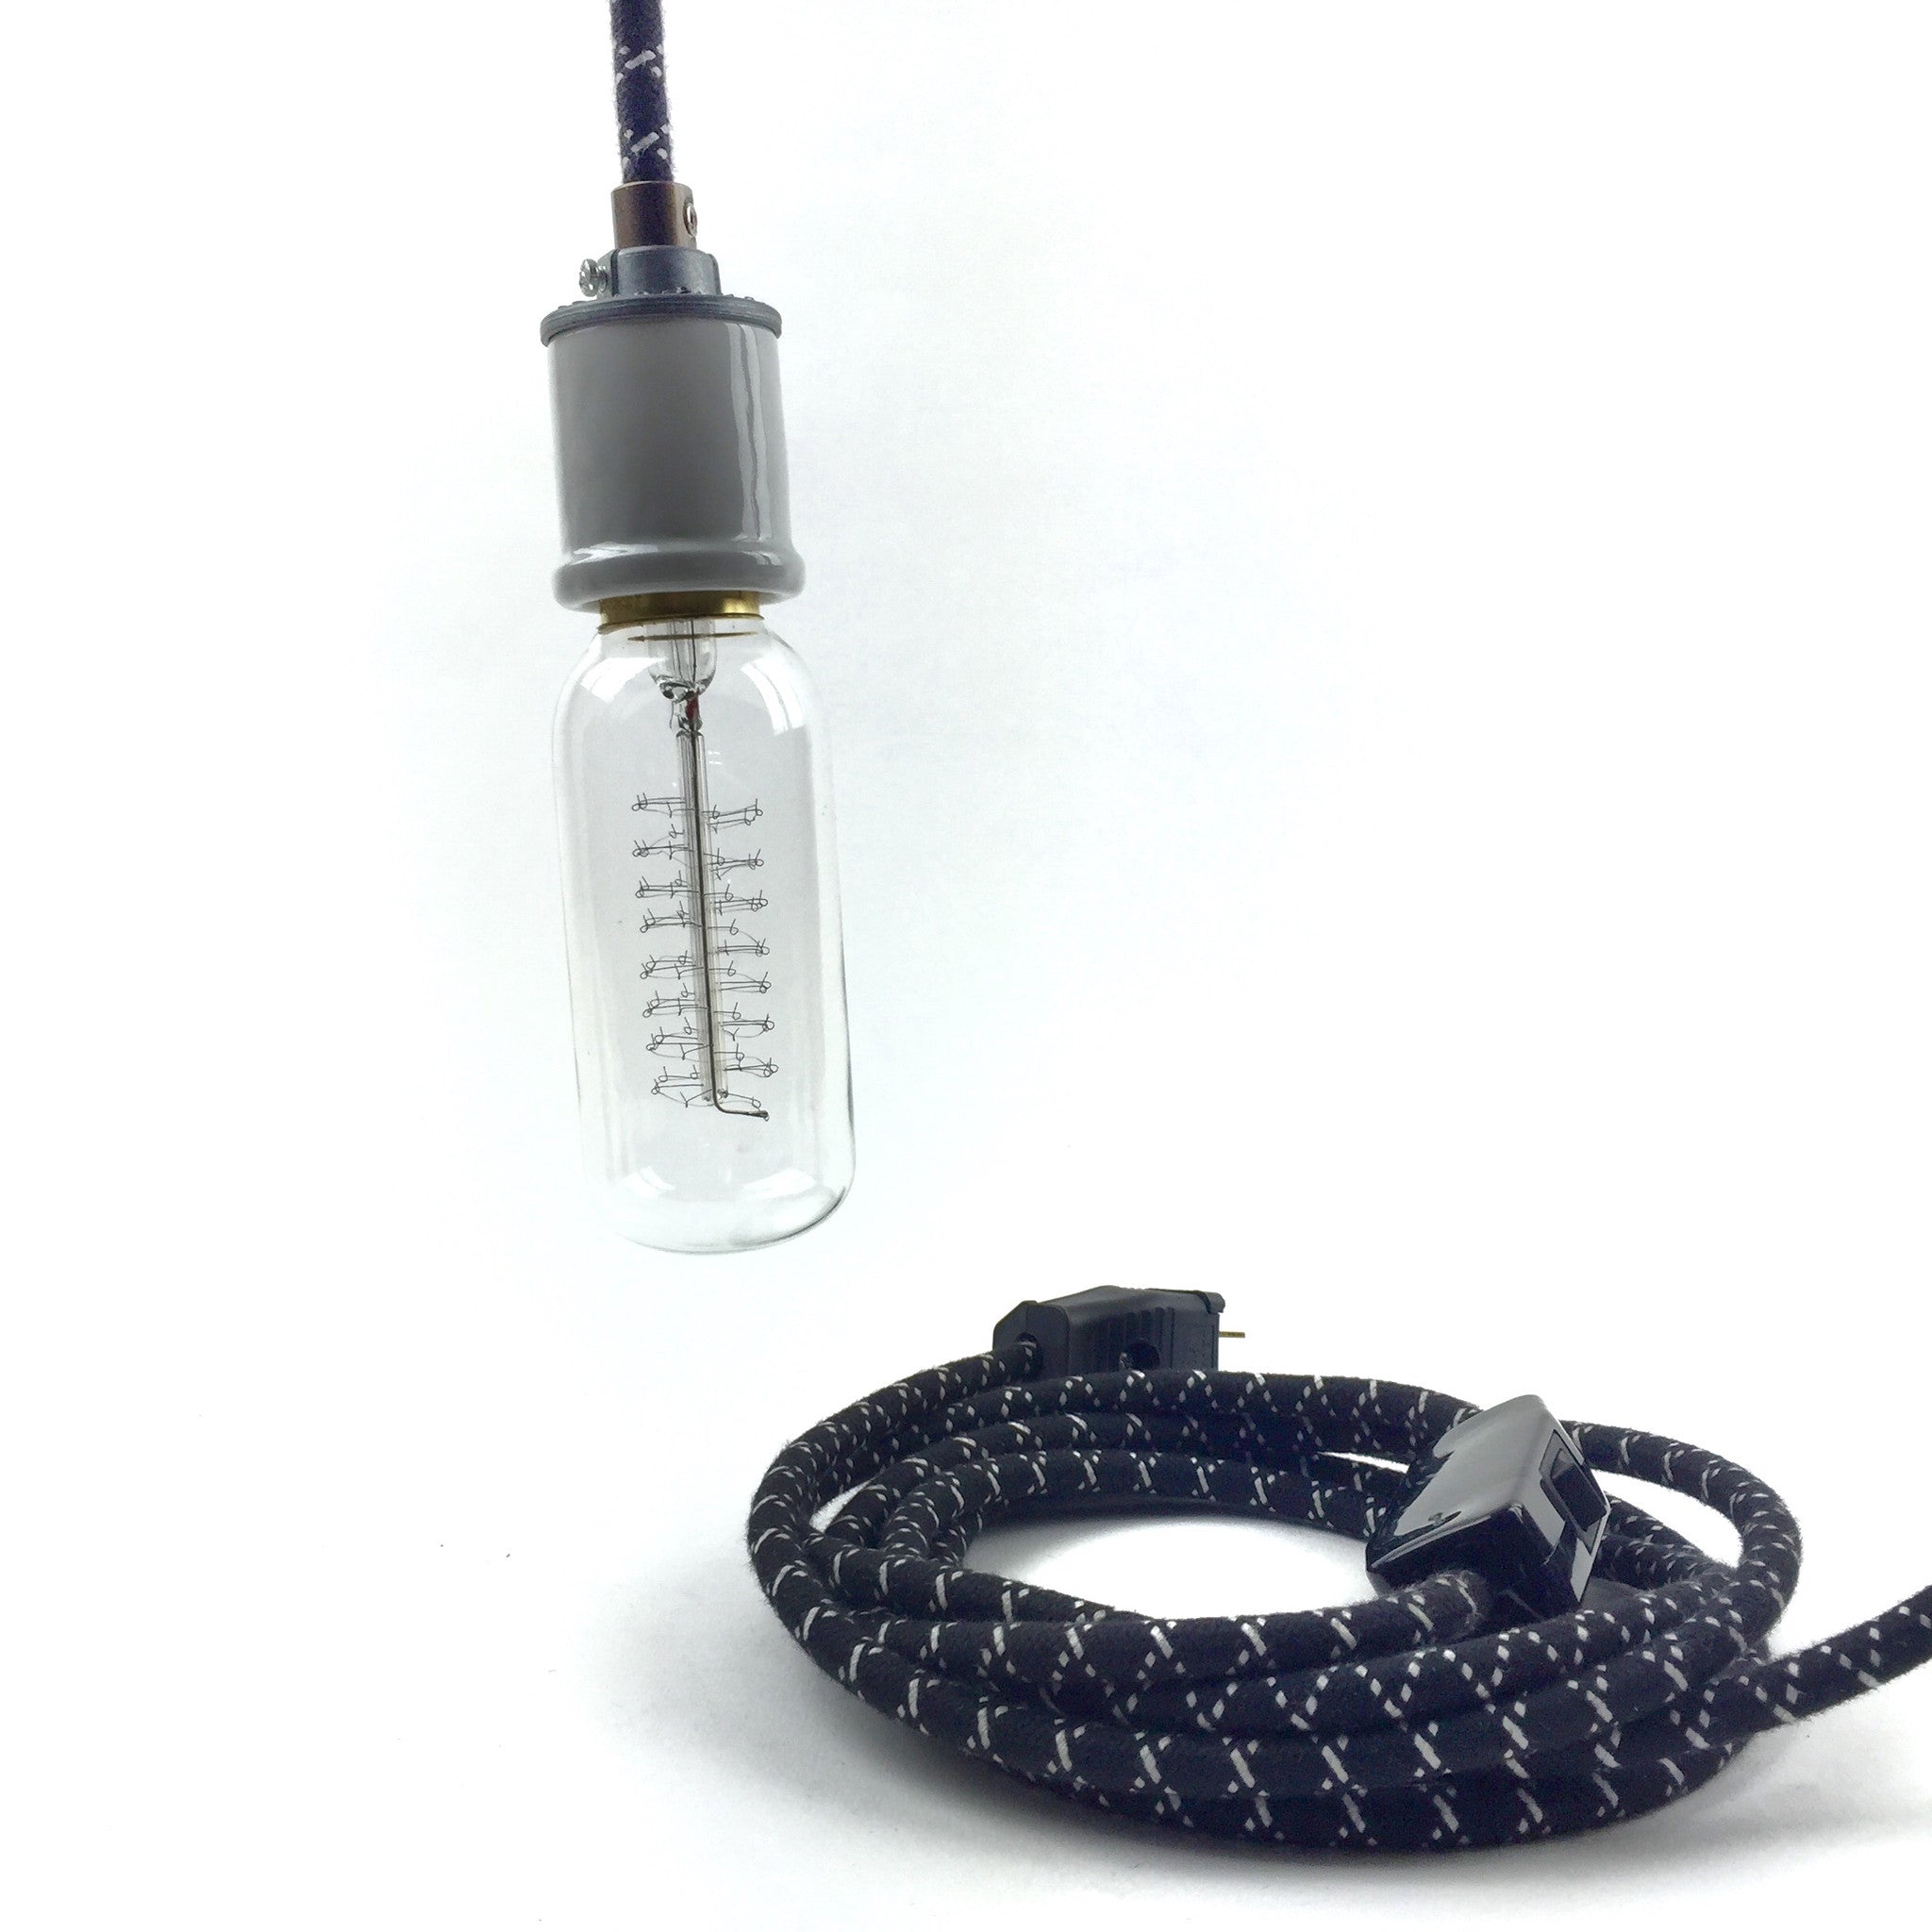 The Portland Pendant - A 12ft Ceramic Flanged-Socket Pendant Lamp w/ Inline Rocker Switch